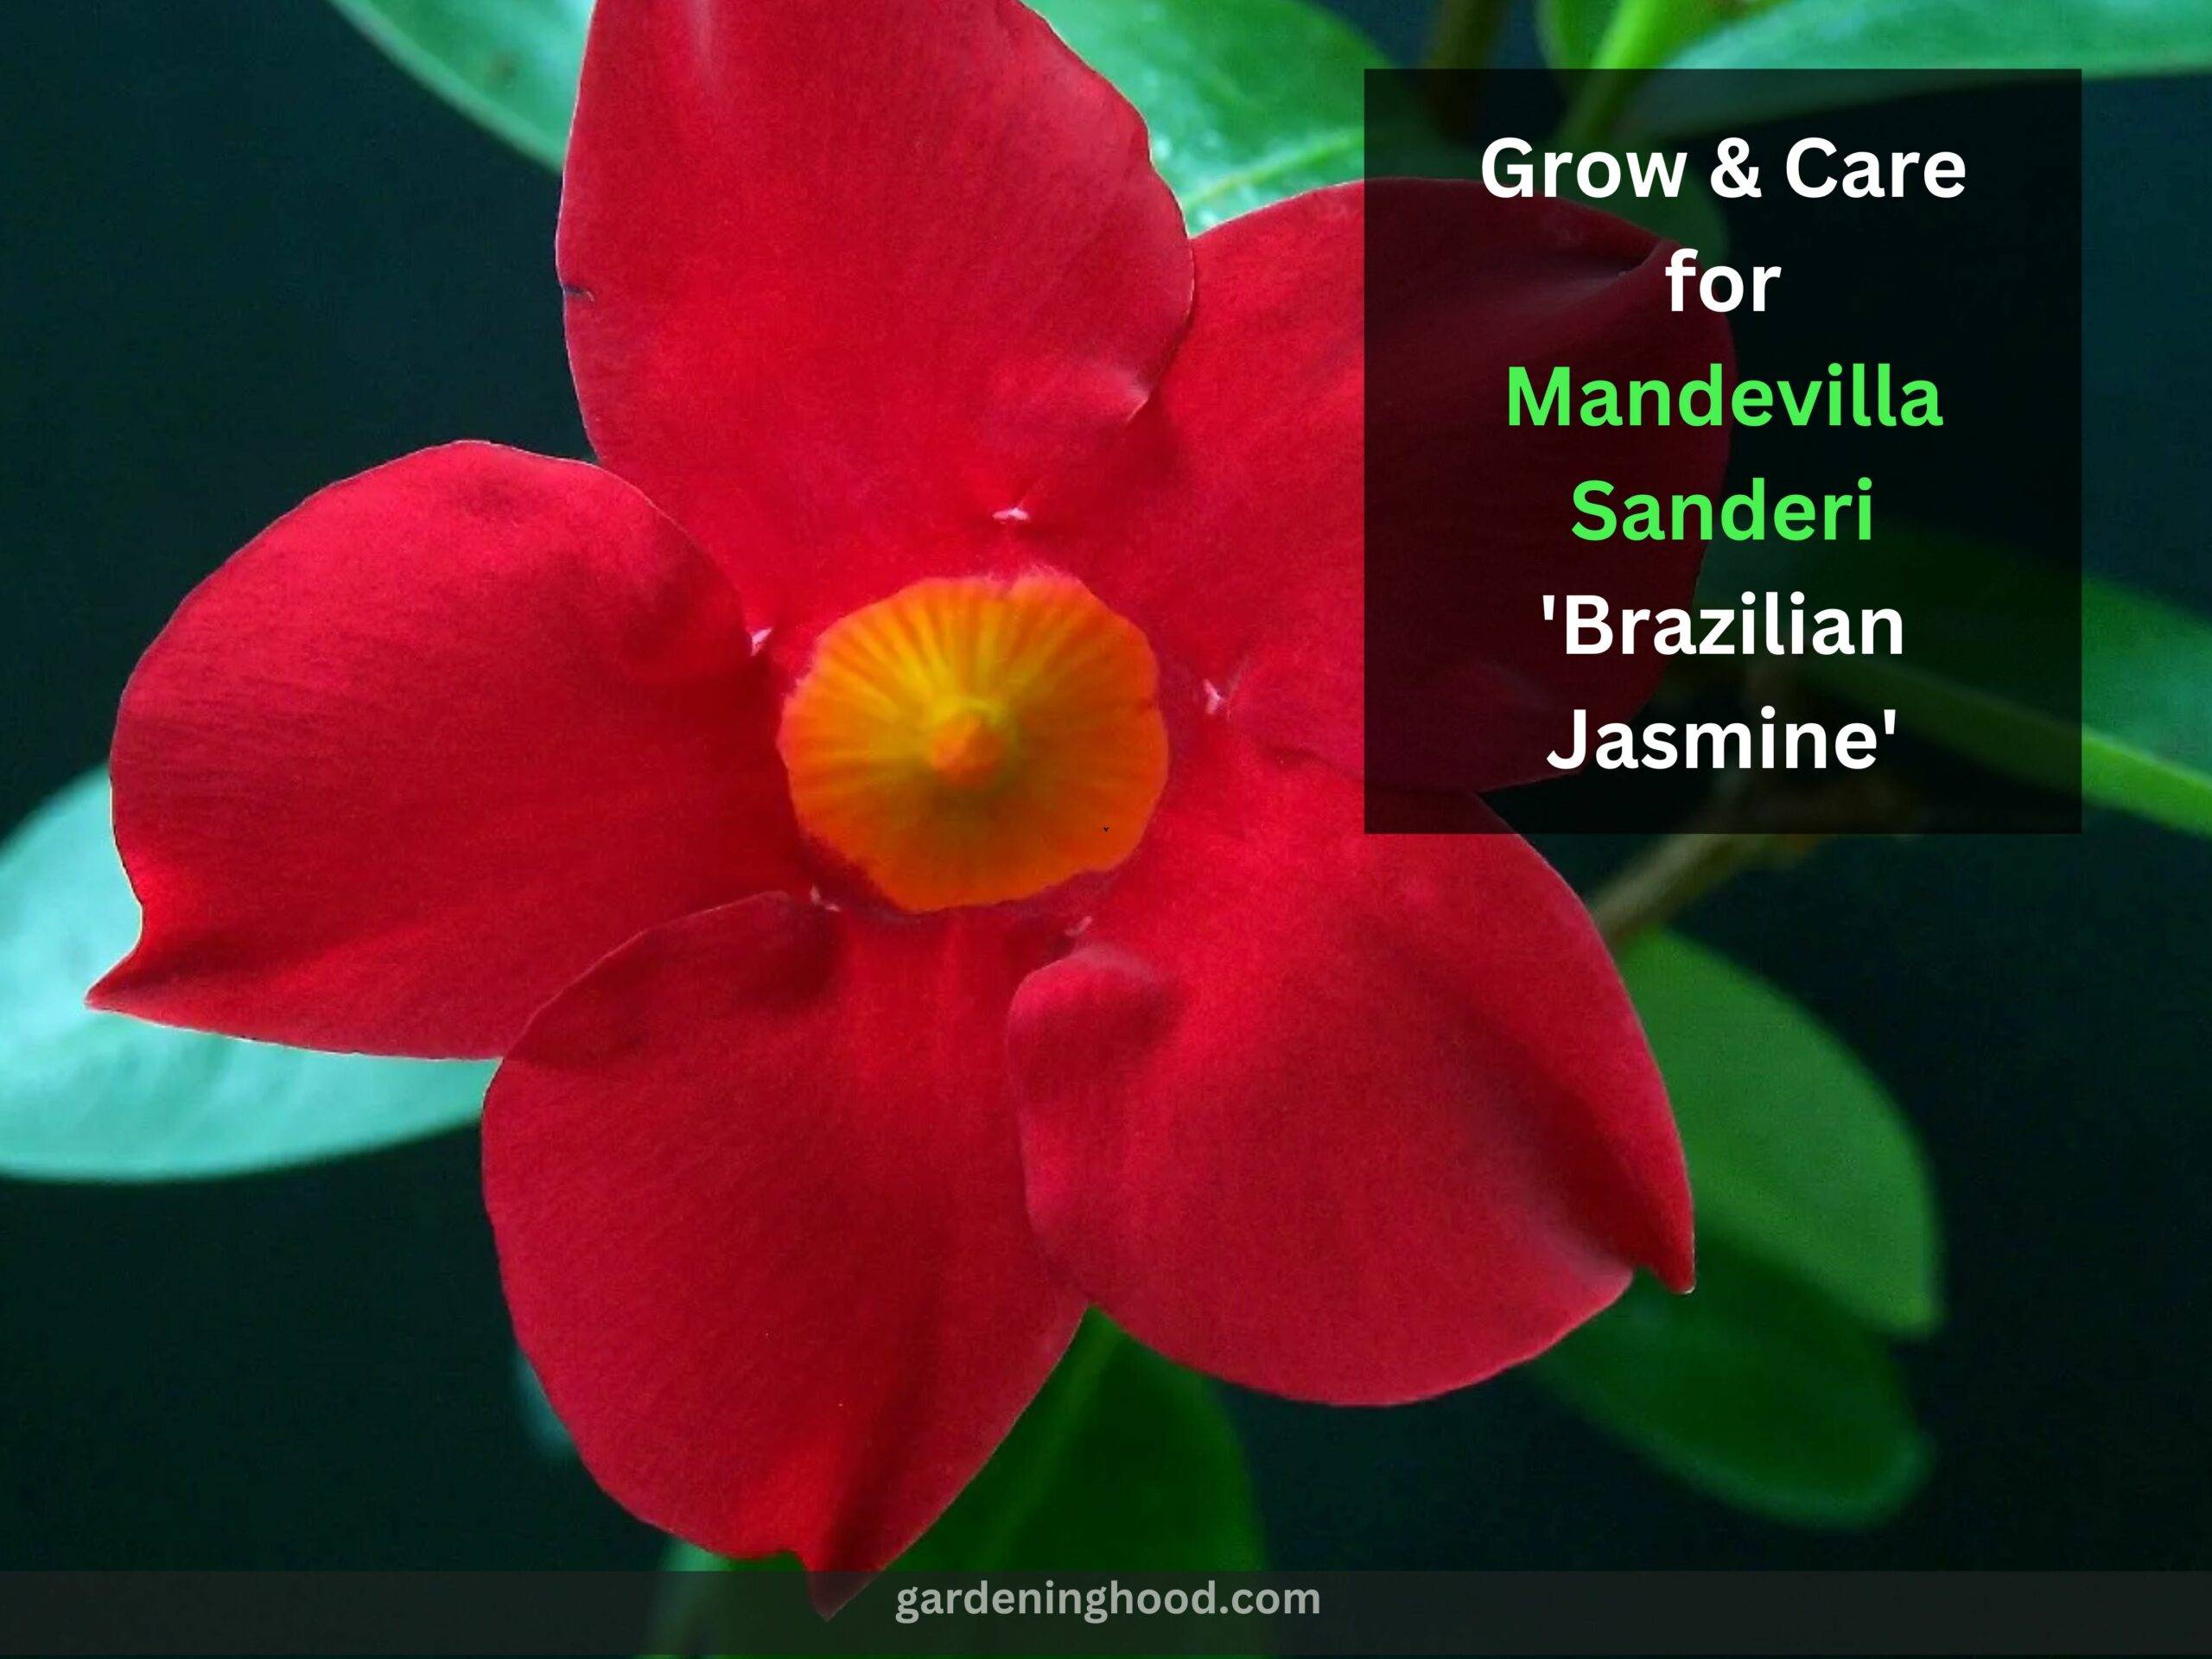 How to Grow & Care for Mandevilla Sanderi 'Brazilian Jasmine'